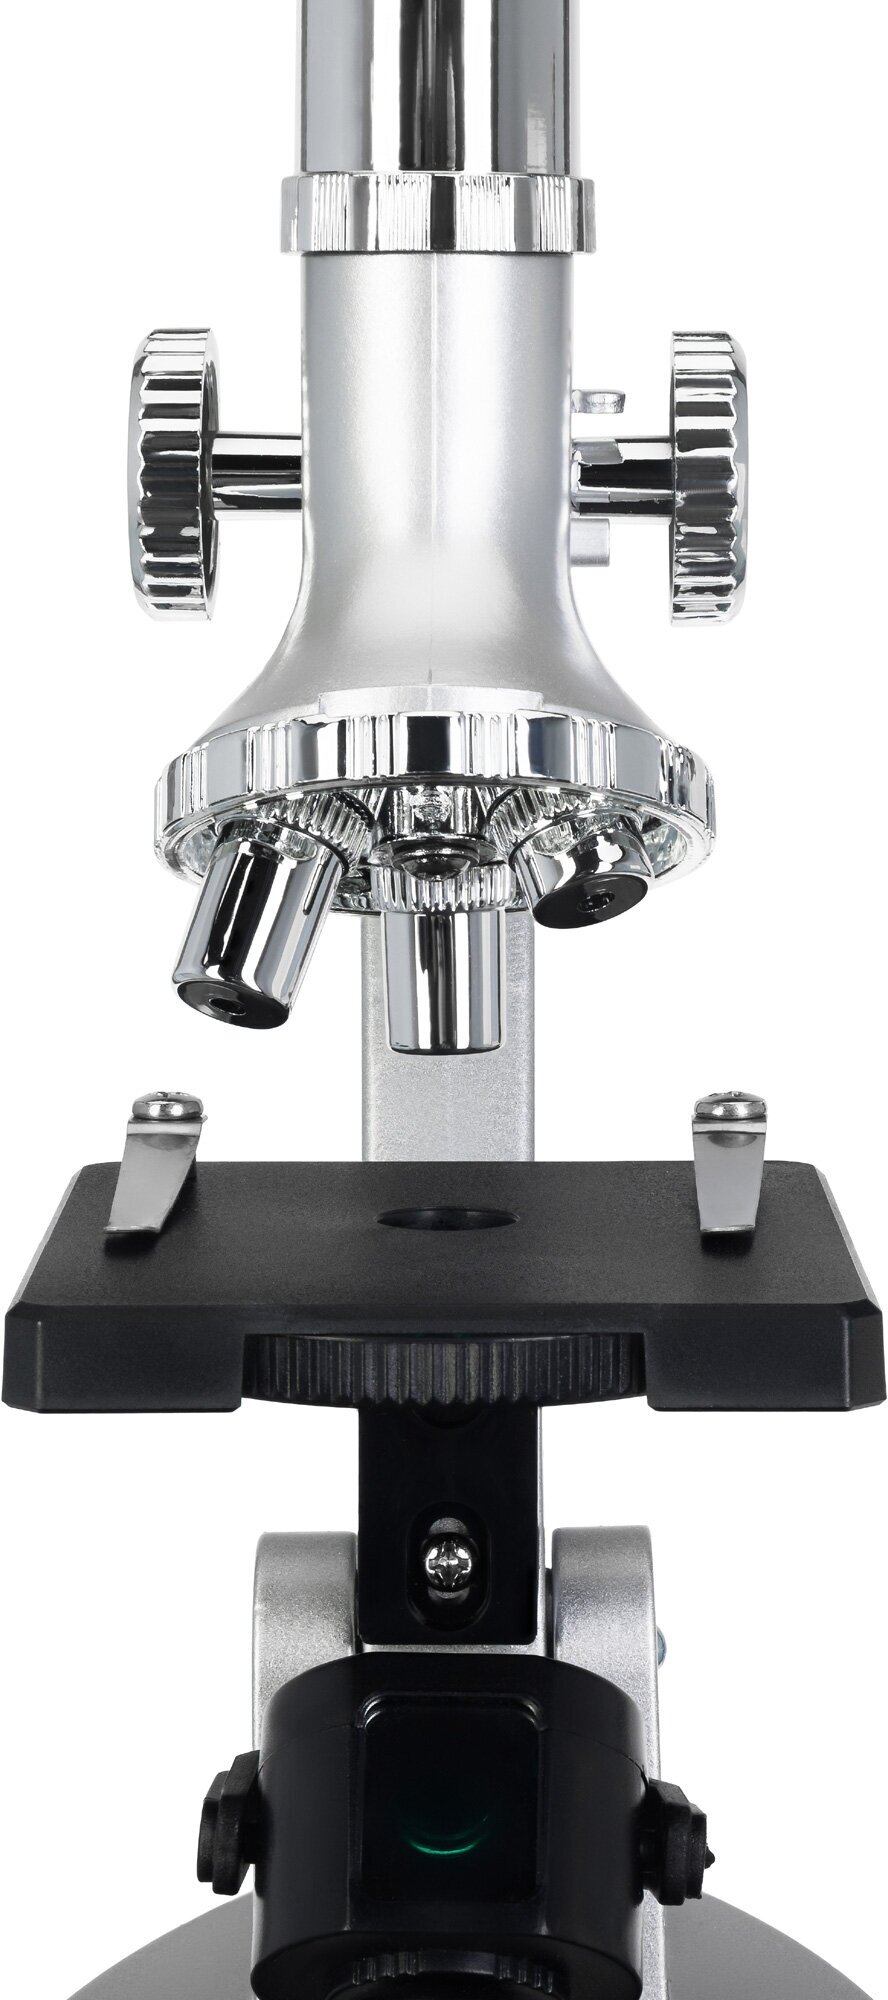 Bresser (Брессер) Микроскоп Bresser Junior Biotar 300–1200x, без кейса